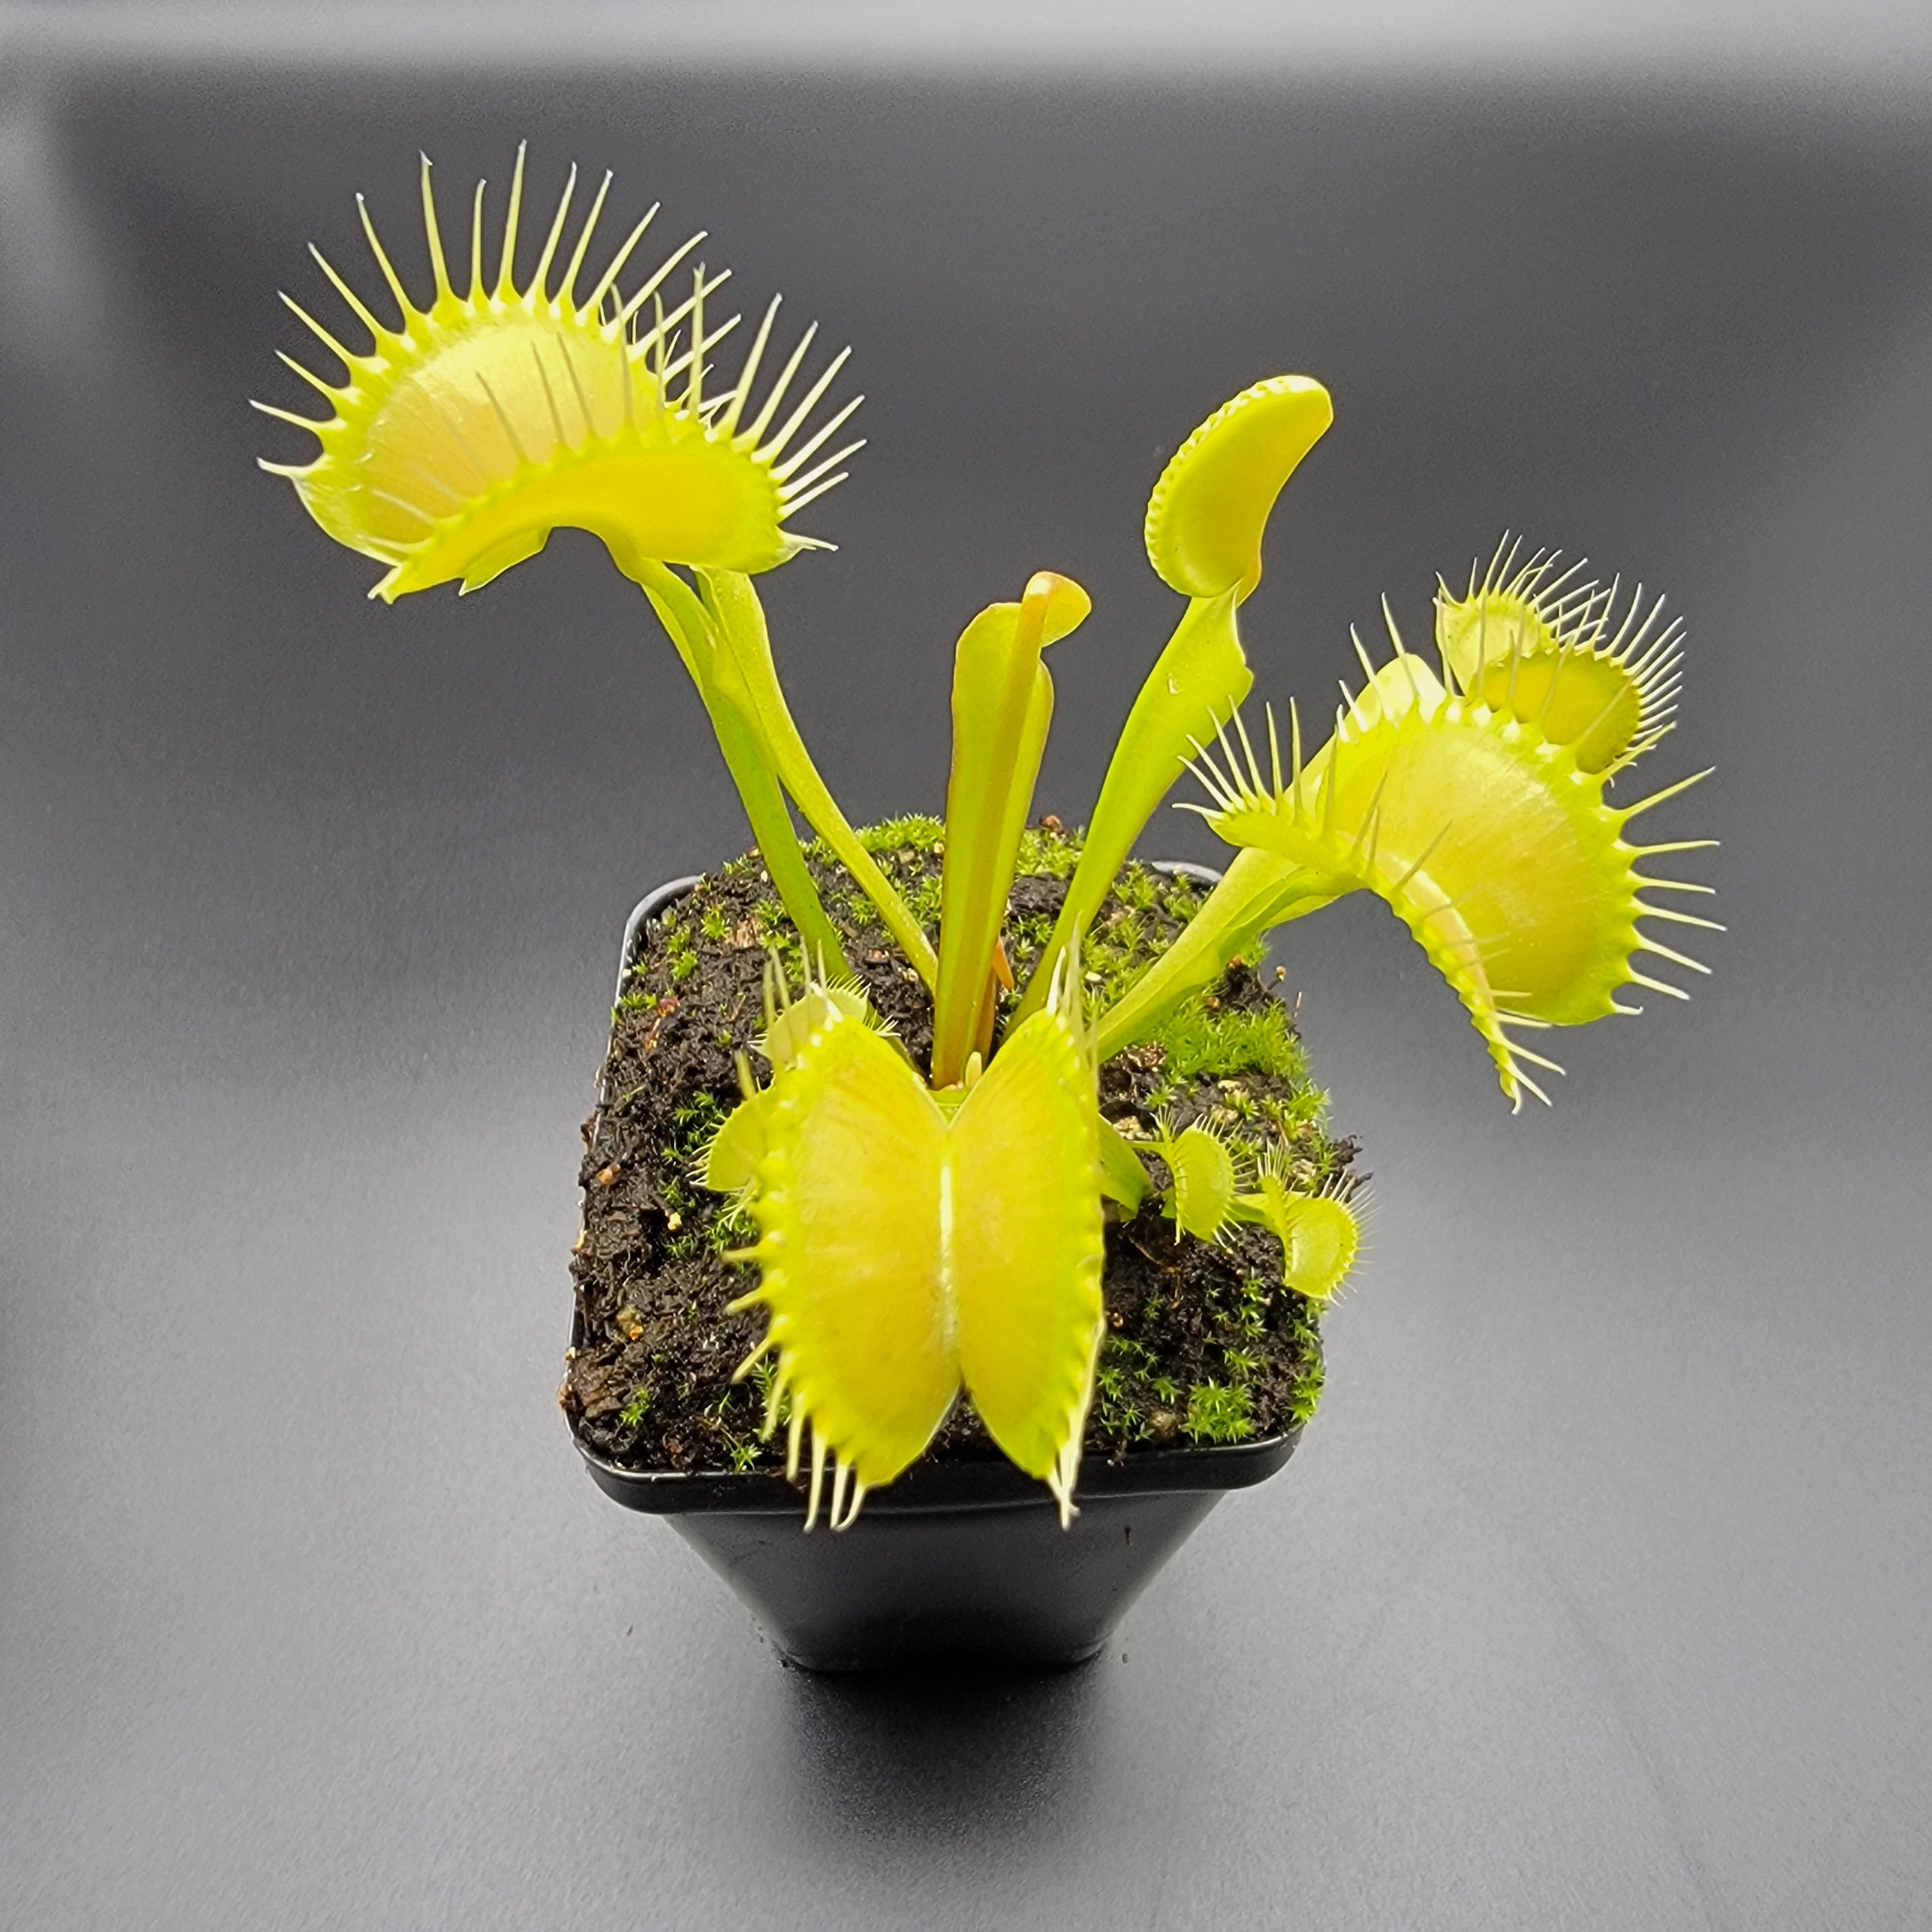 Venus flytrap (Dionaea muscipula) 'Big Mouth' x 'B52' - Rainbow Carnivorous Plants LLC